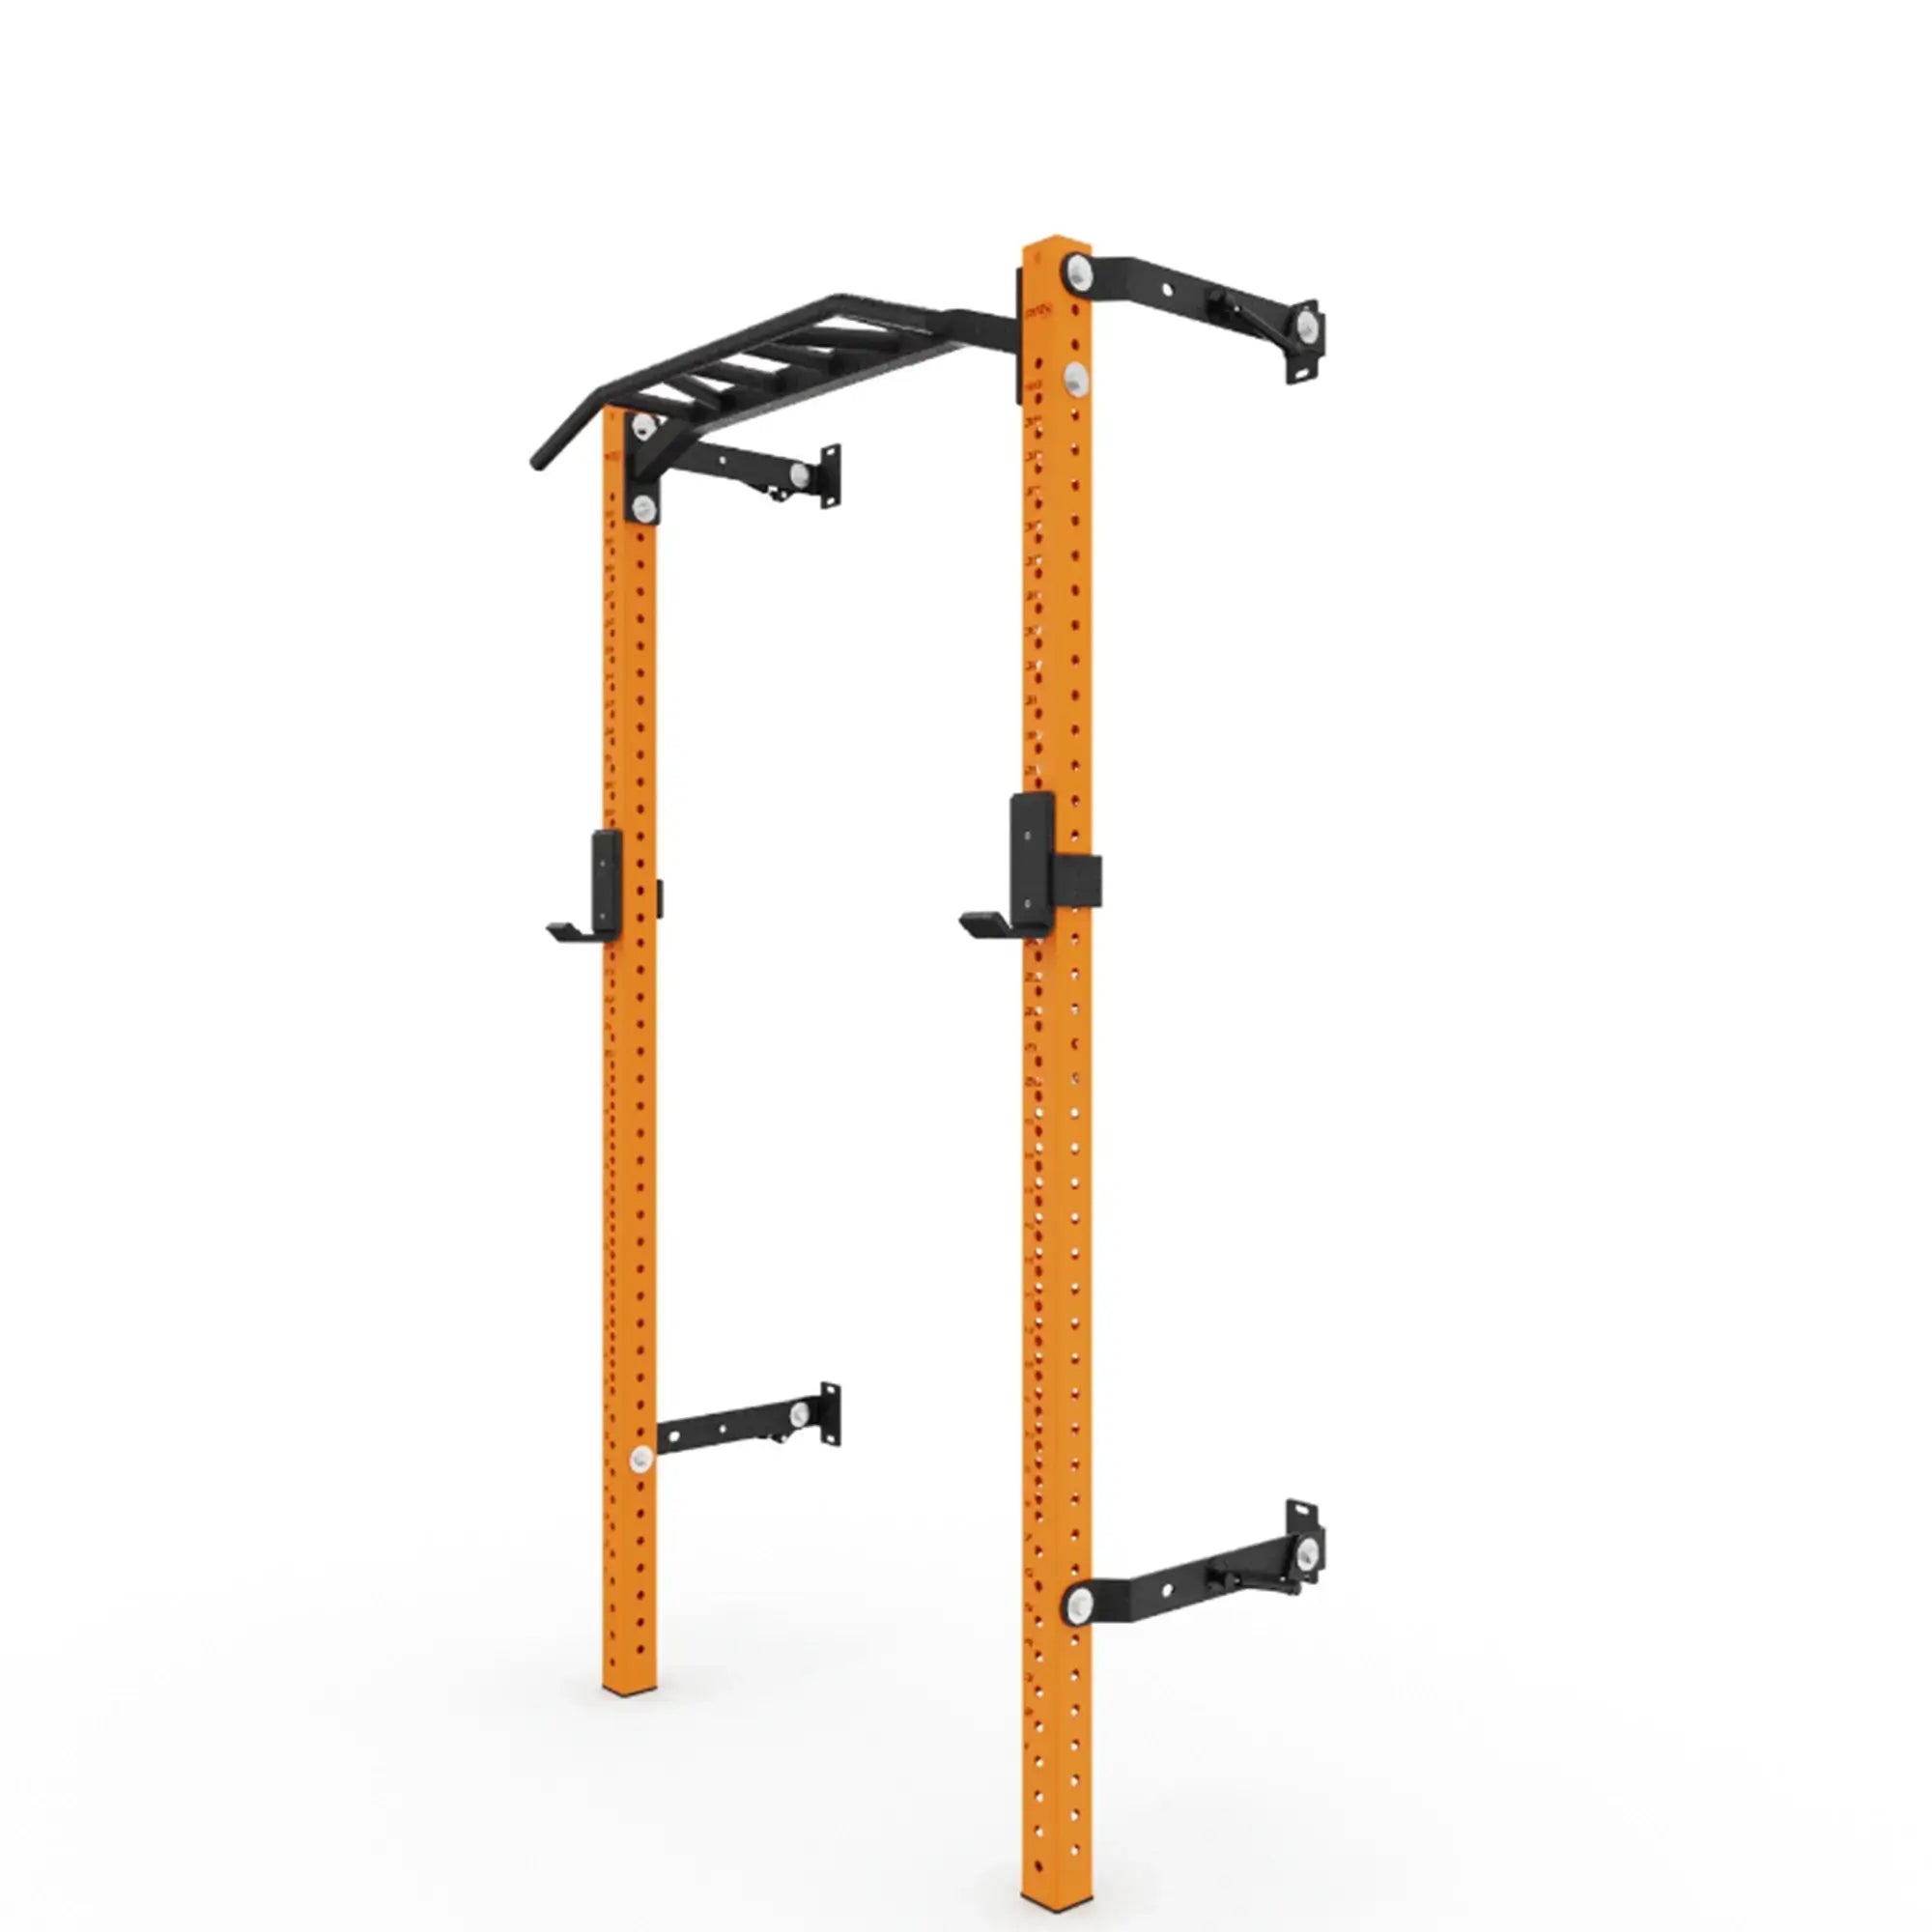 PRx Profile PRO Folding Squat Rack with Multi-Grip Bar - Orange in down position